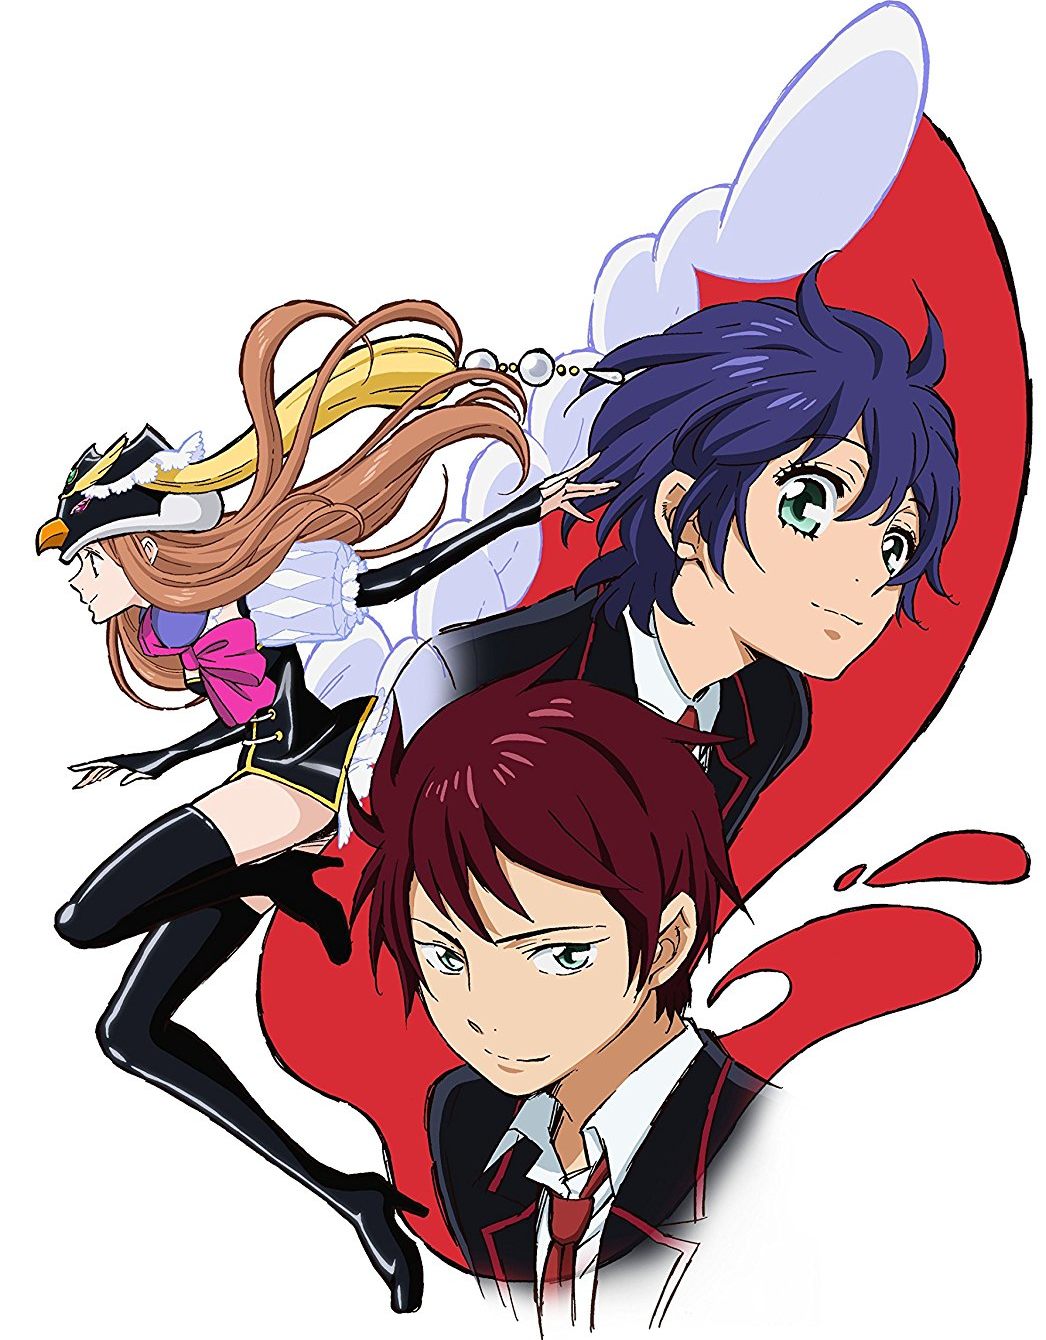 Ao Haru Ride Anime's 1st Promo Streamed - News - Anime News Network